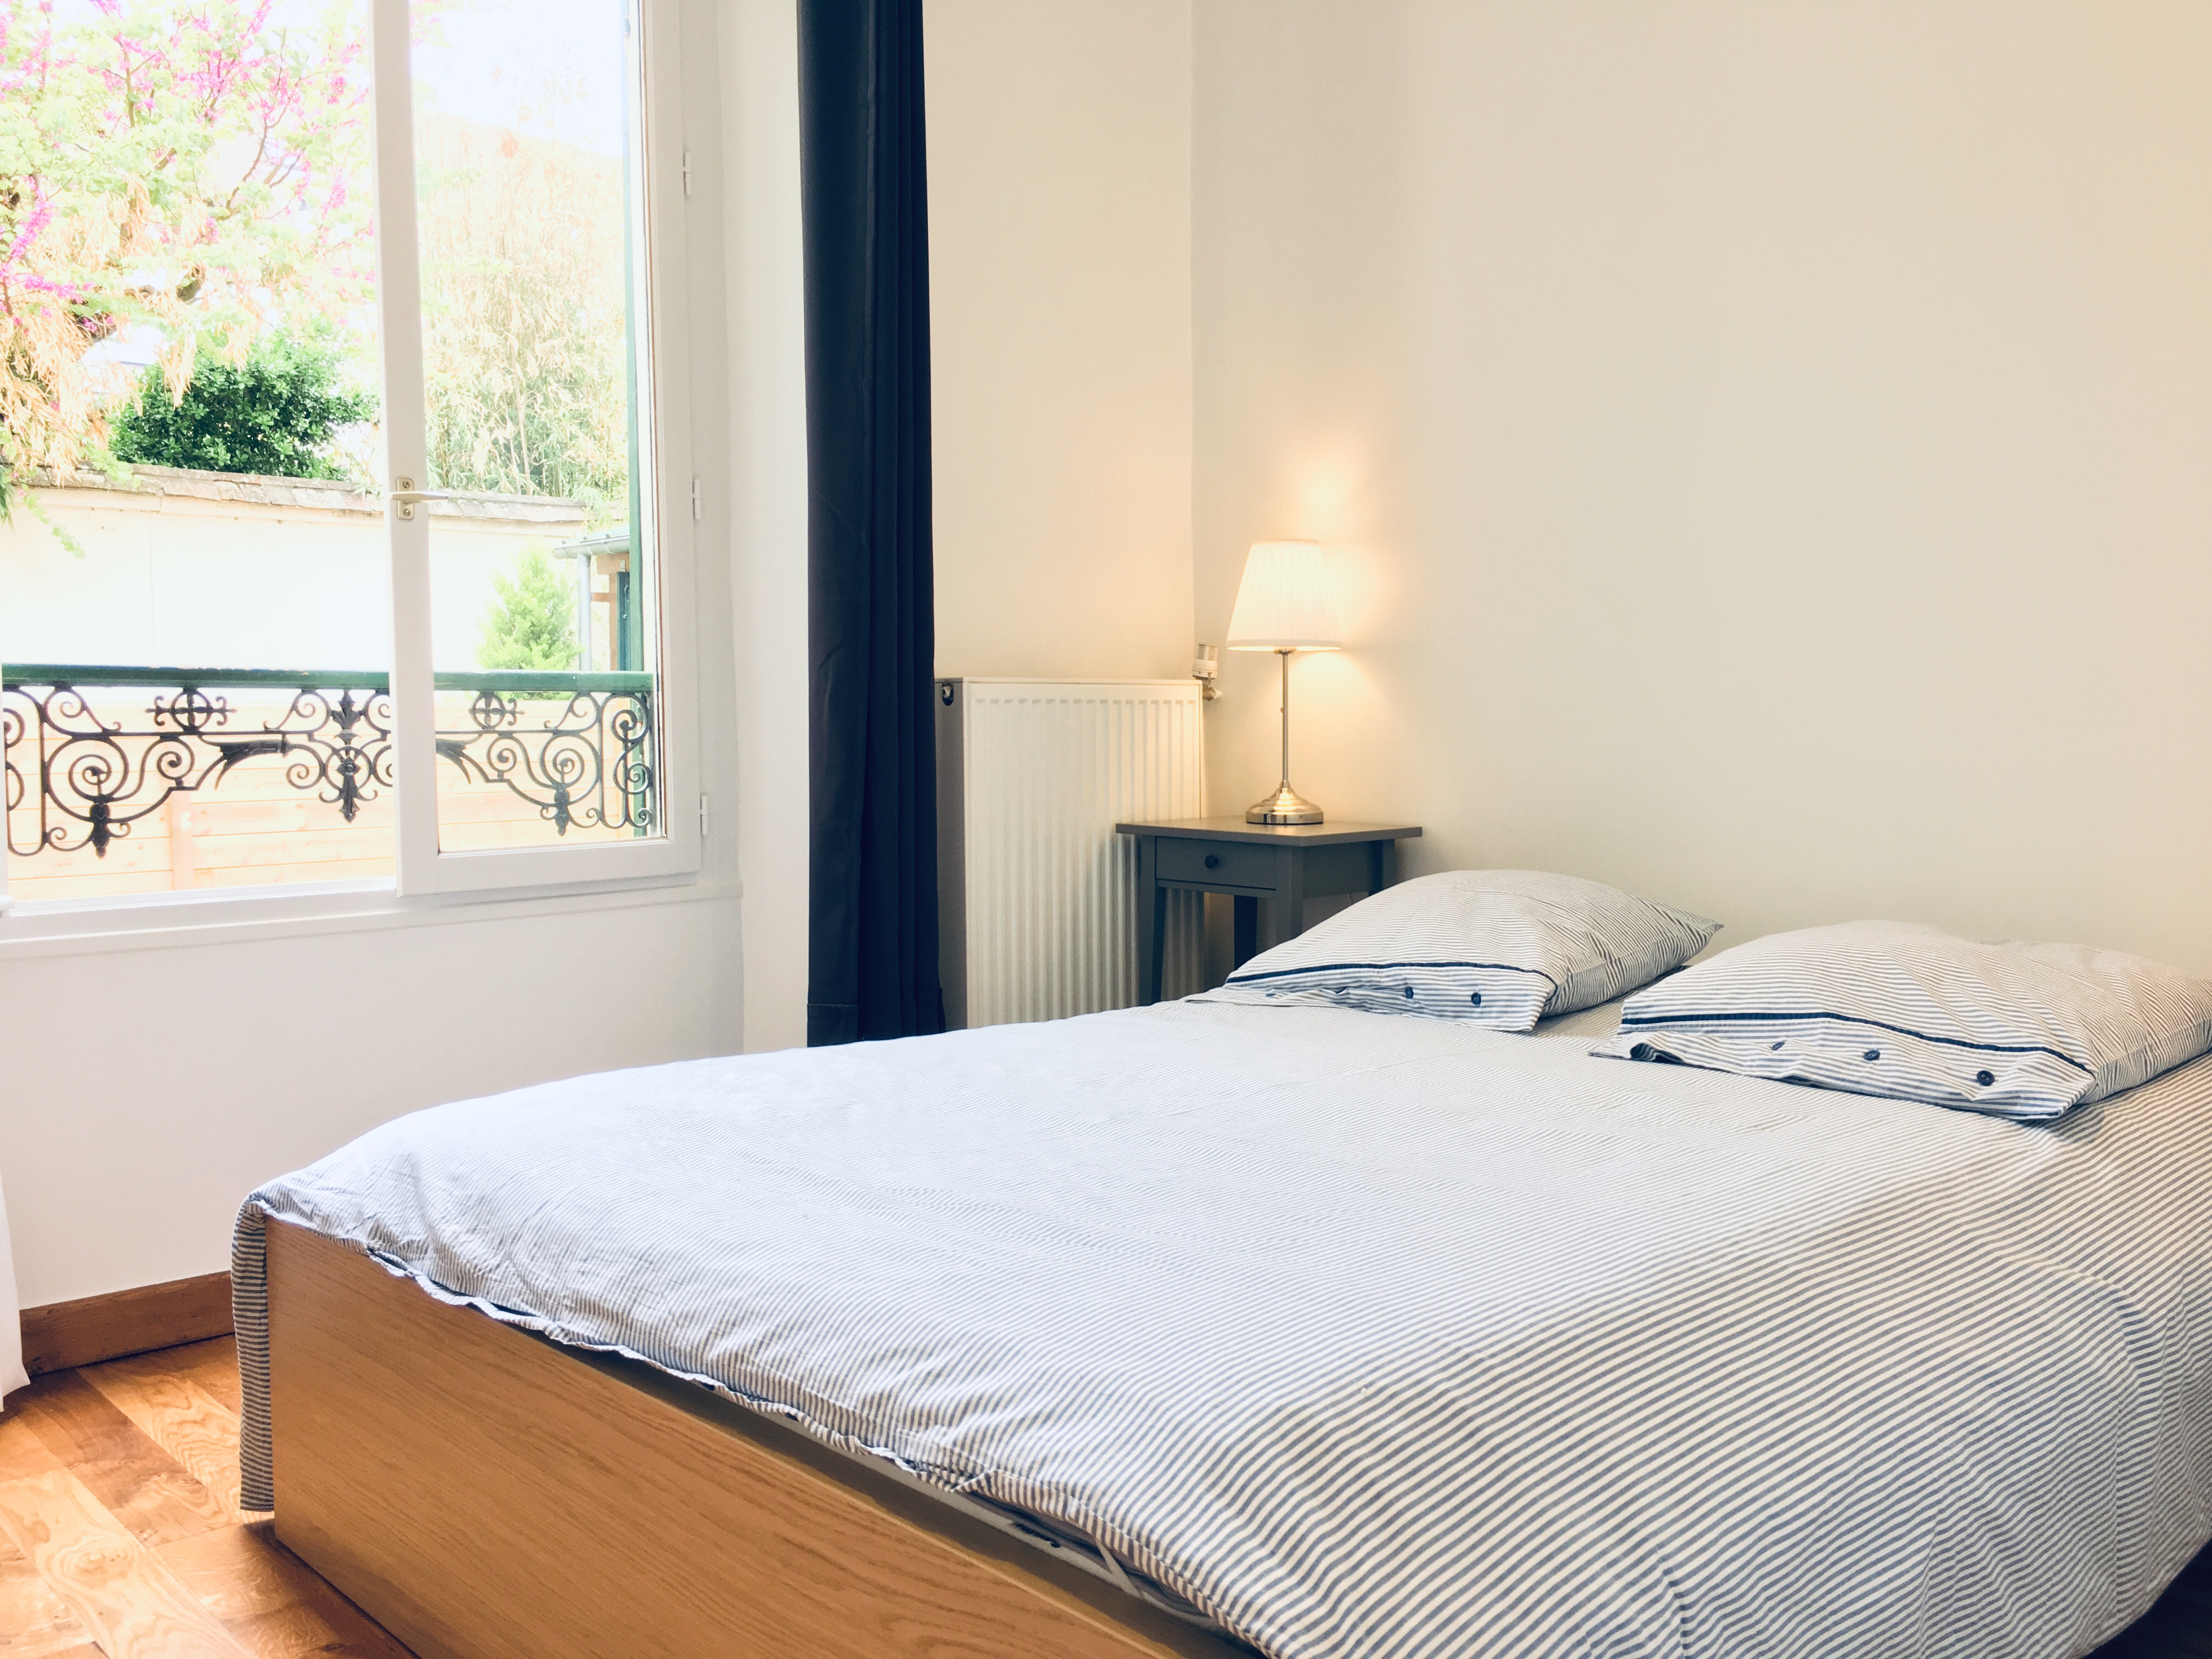 MBA insead student housing Premium flat Paris Fontainebleau